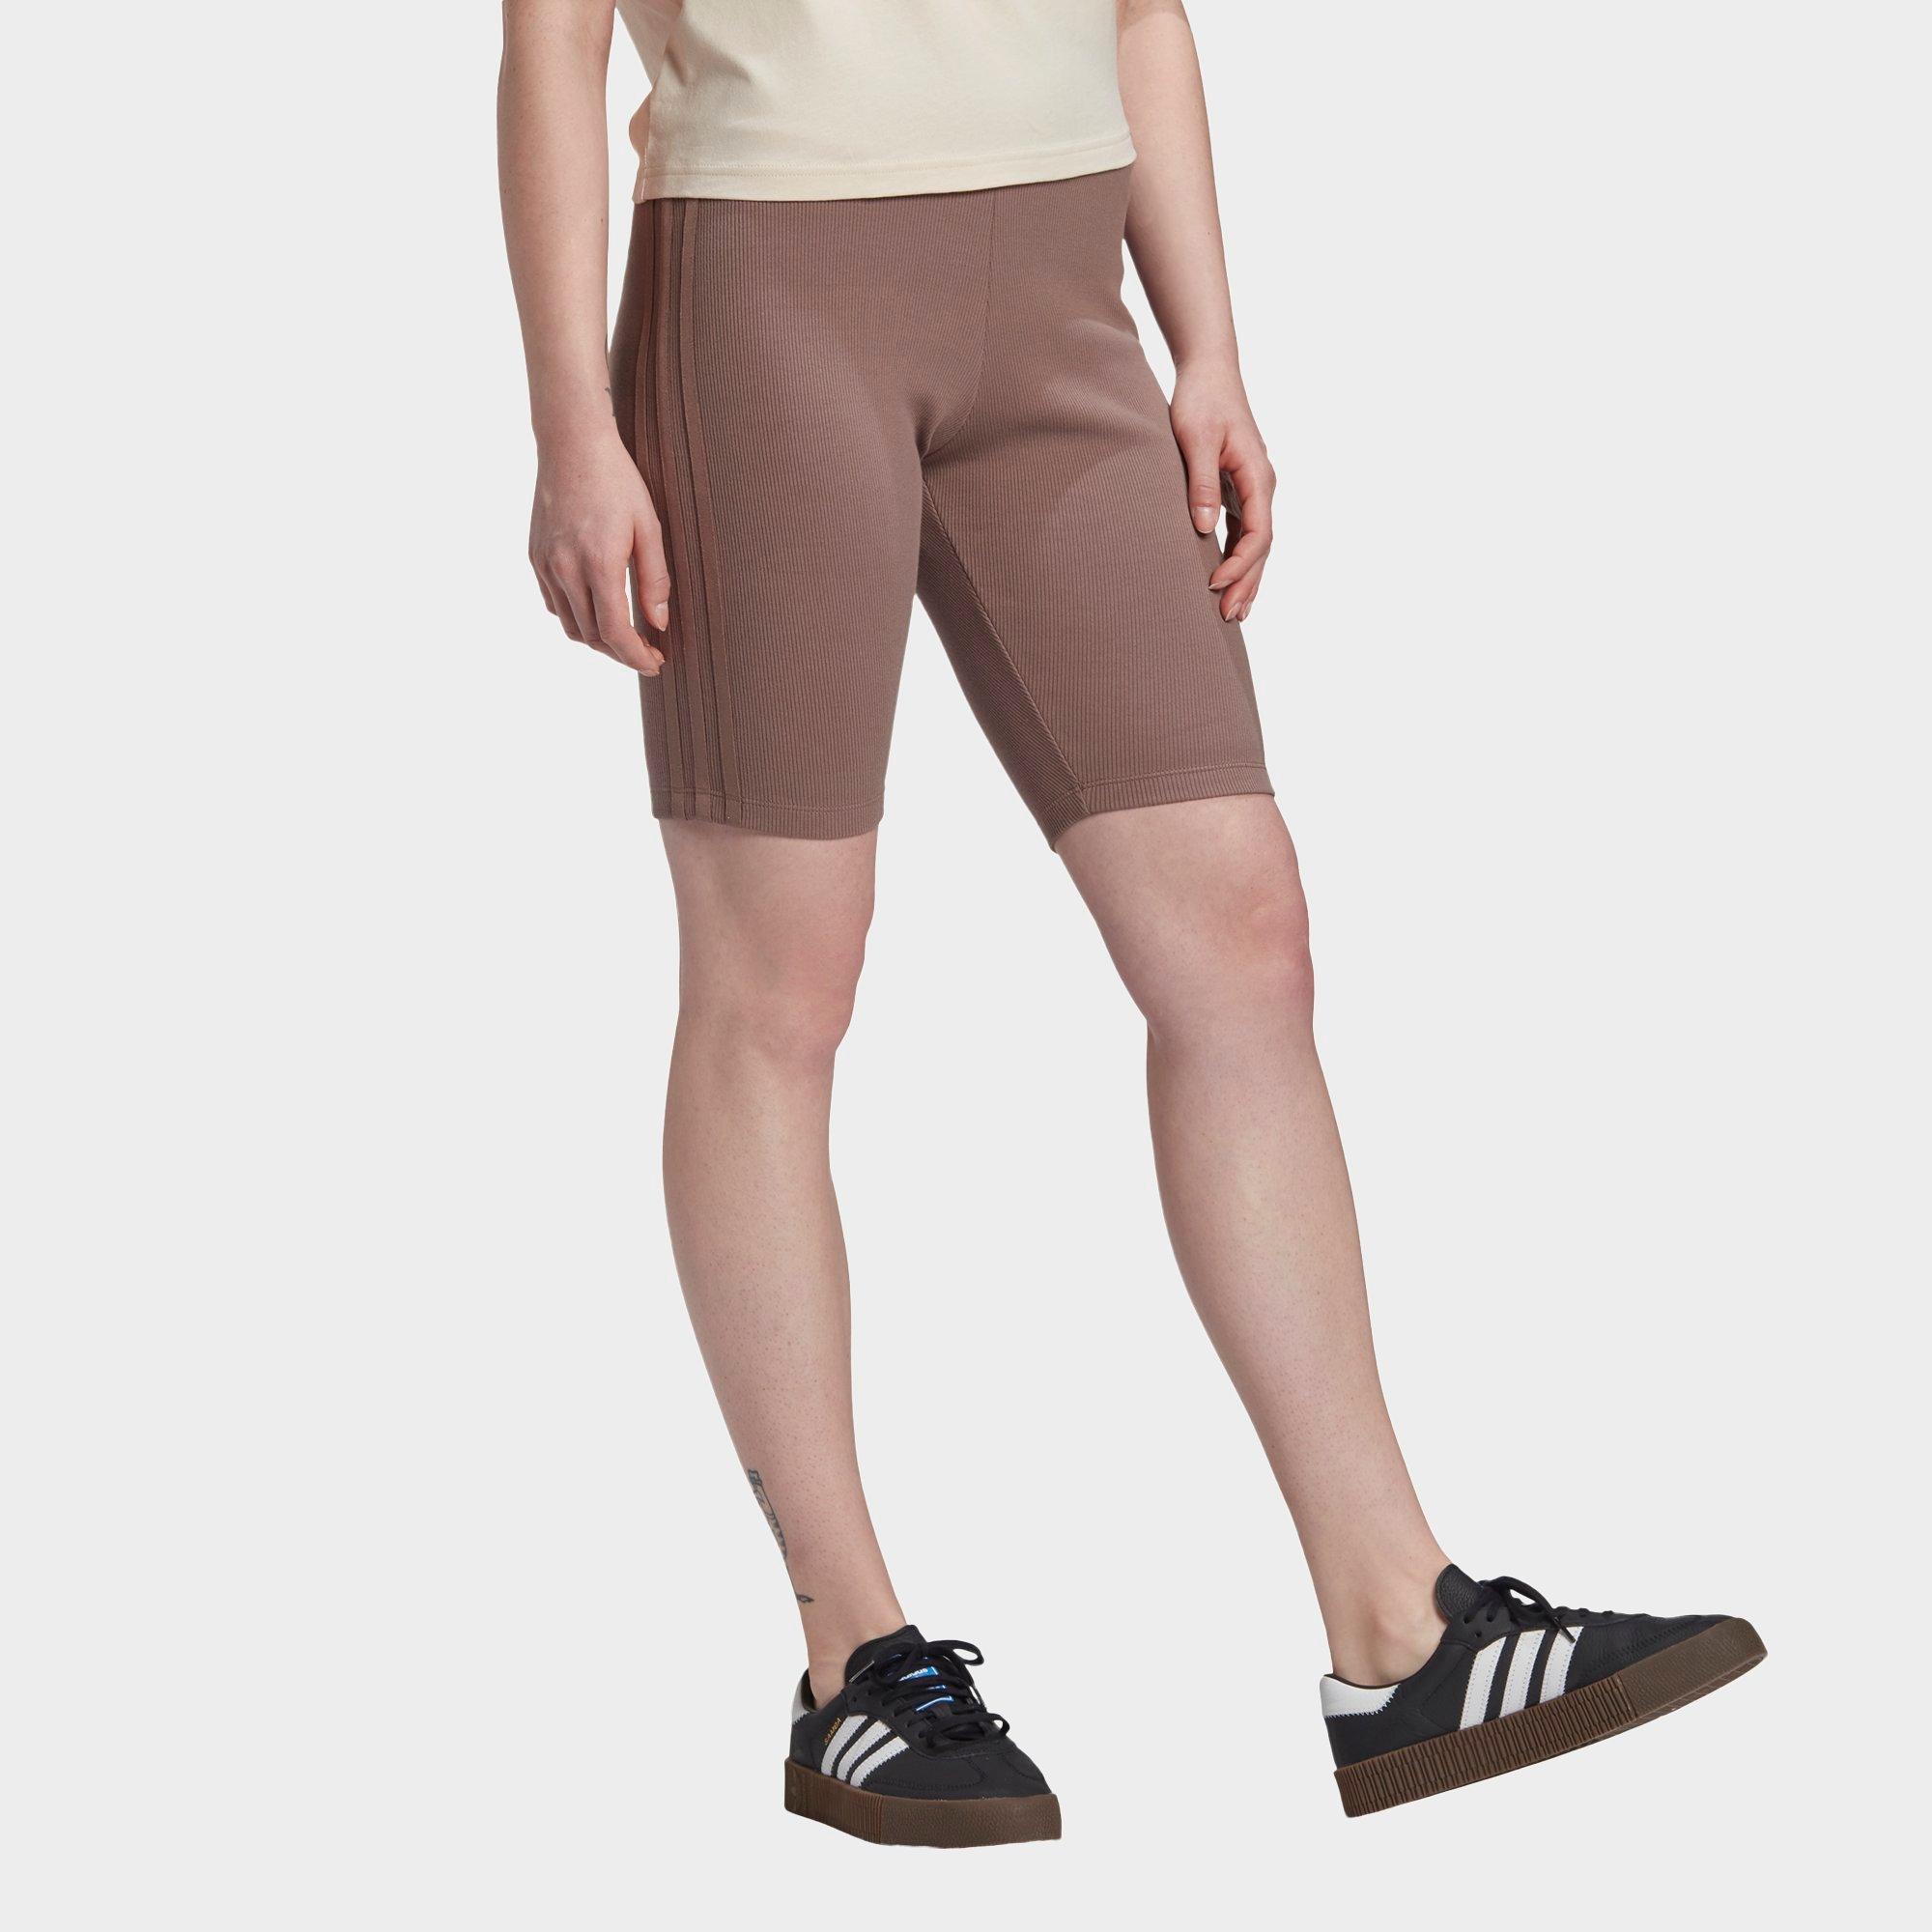 adidas bike shorts